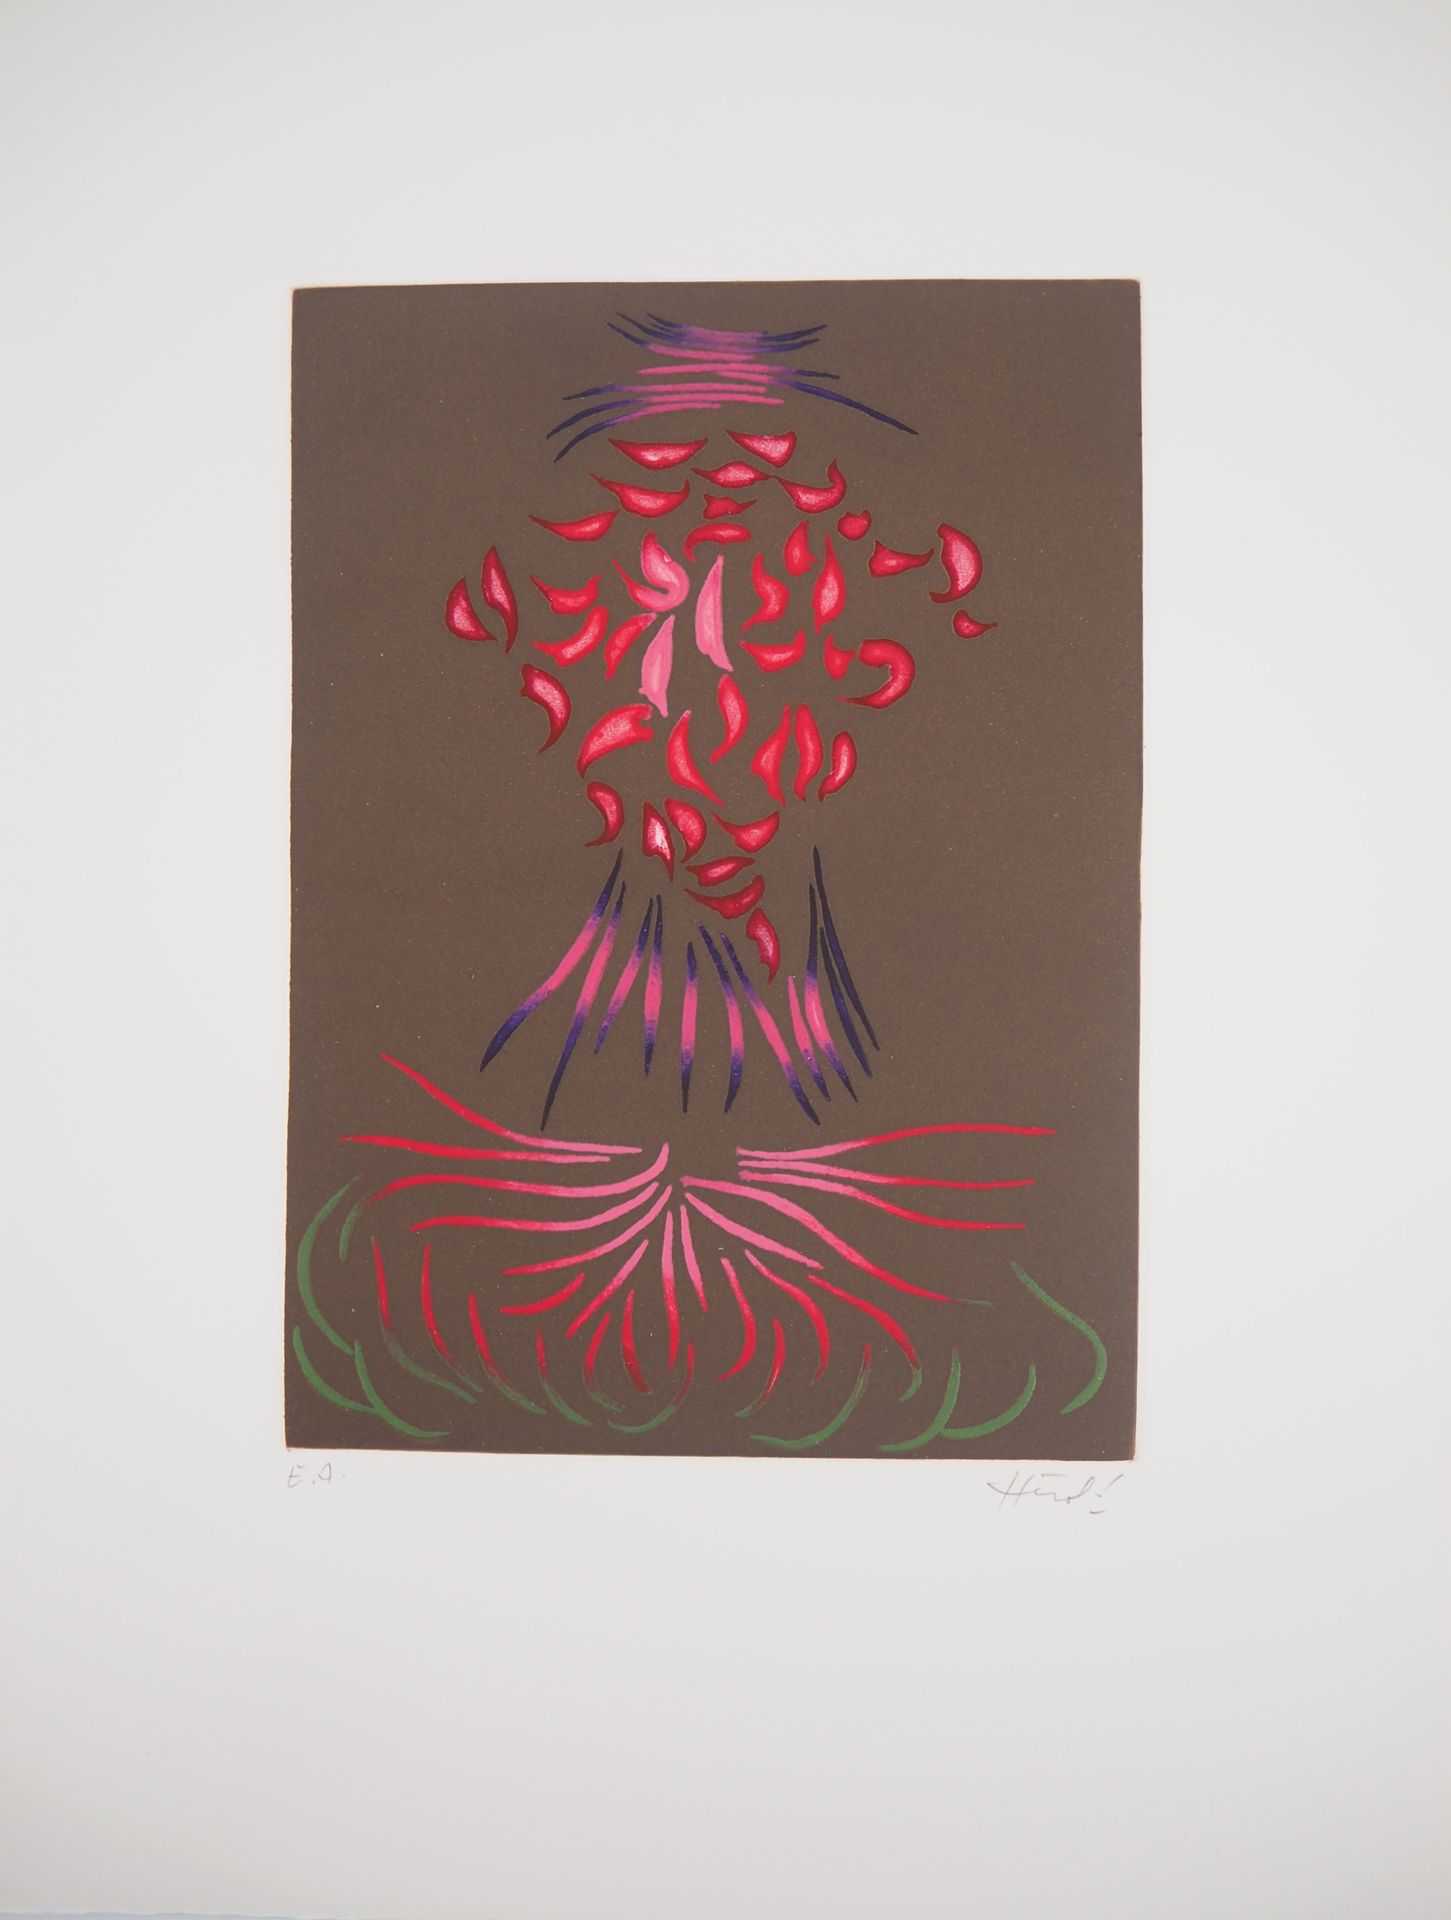 Jacques HEROLD Jacques HEROLD (1910-1985)

Flor de celosía abstracta, 1975

Agua&hellip;